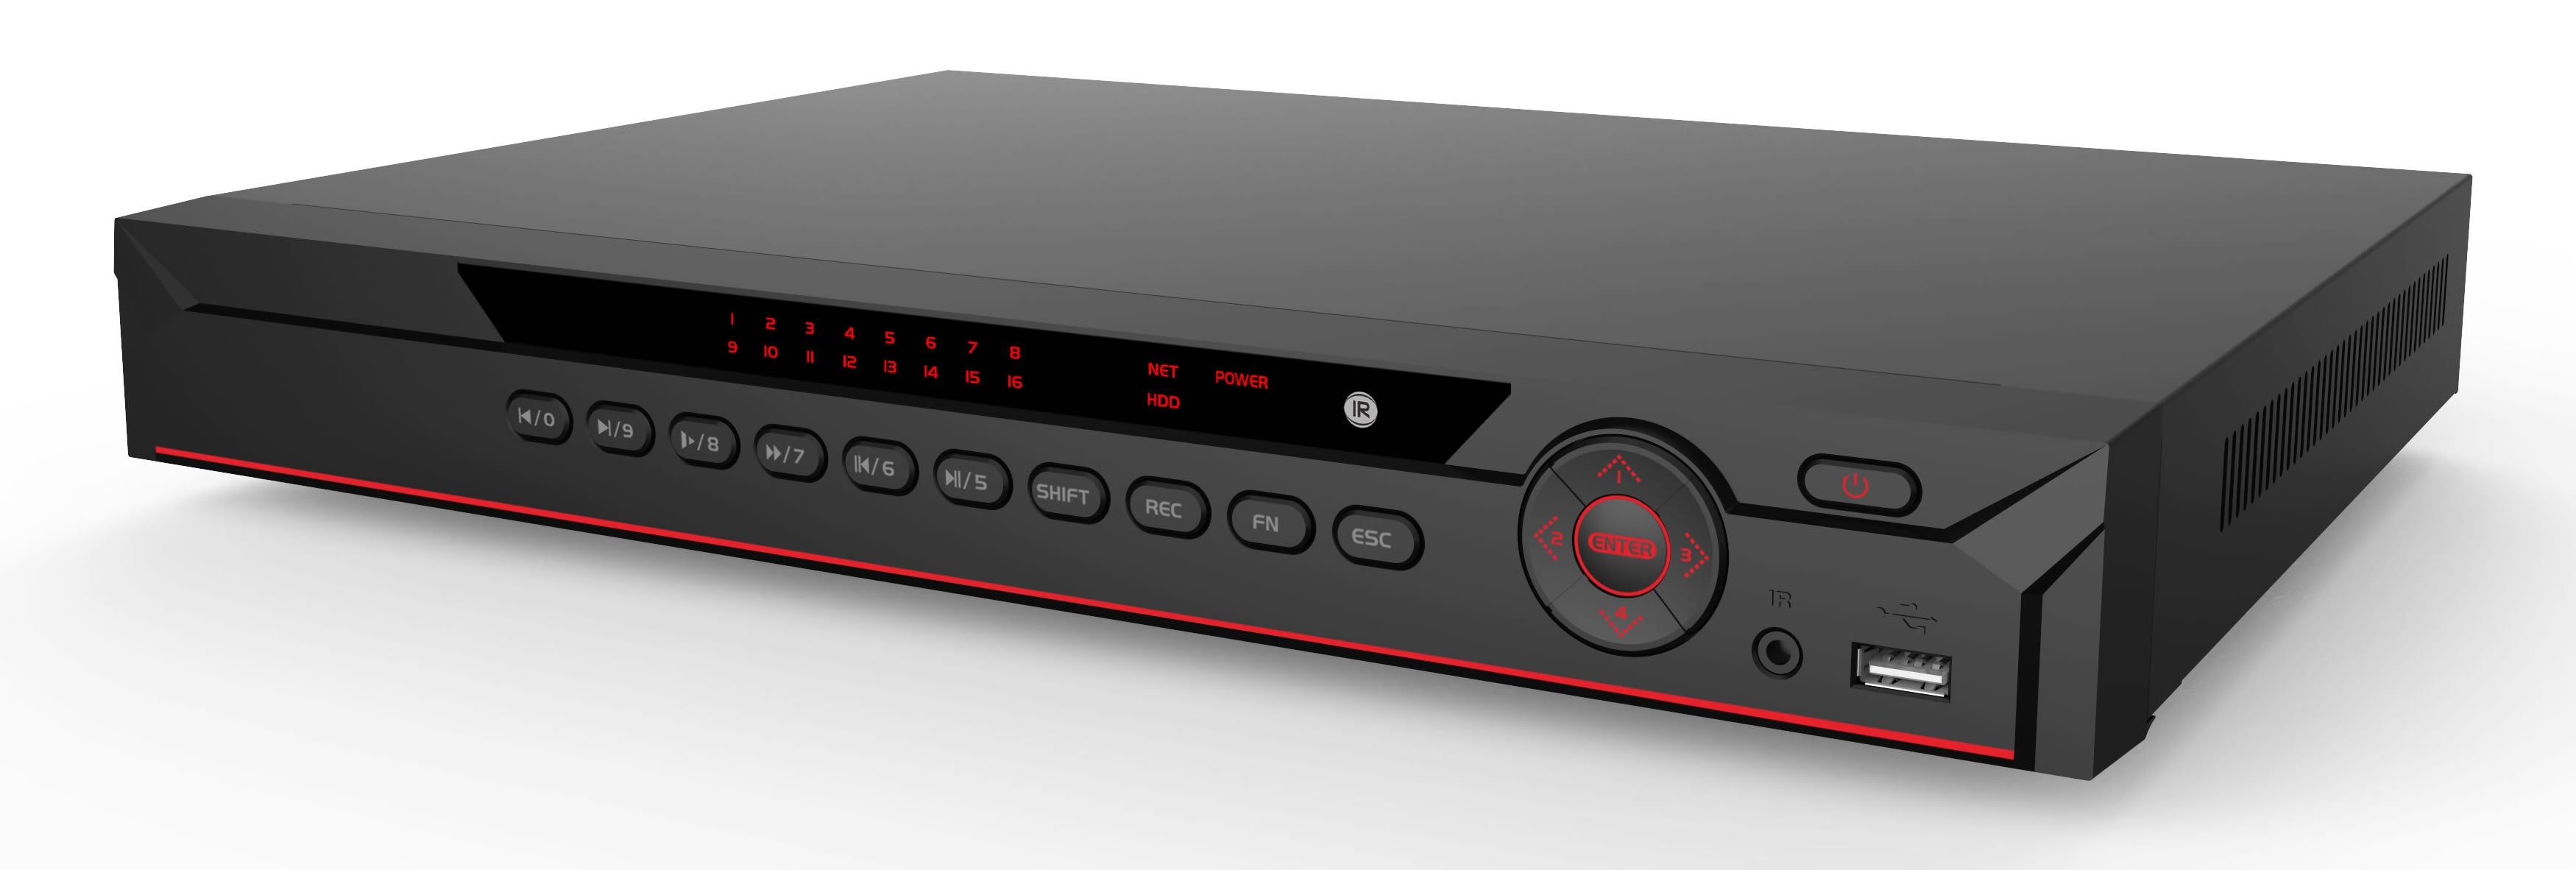 23-4XV52A16-X Digital Video Recorder 16 Channel Penta-brid 1080P 1U H.265 DVR